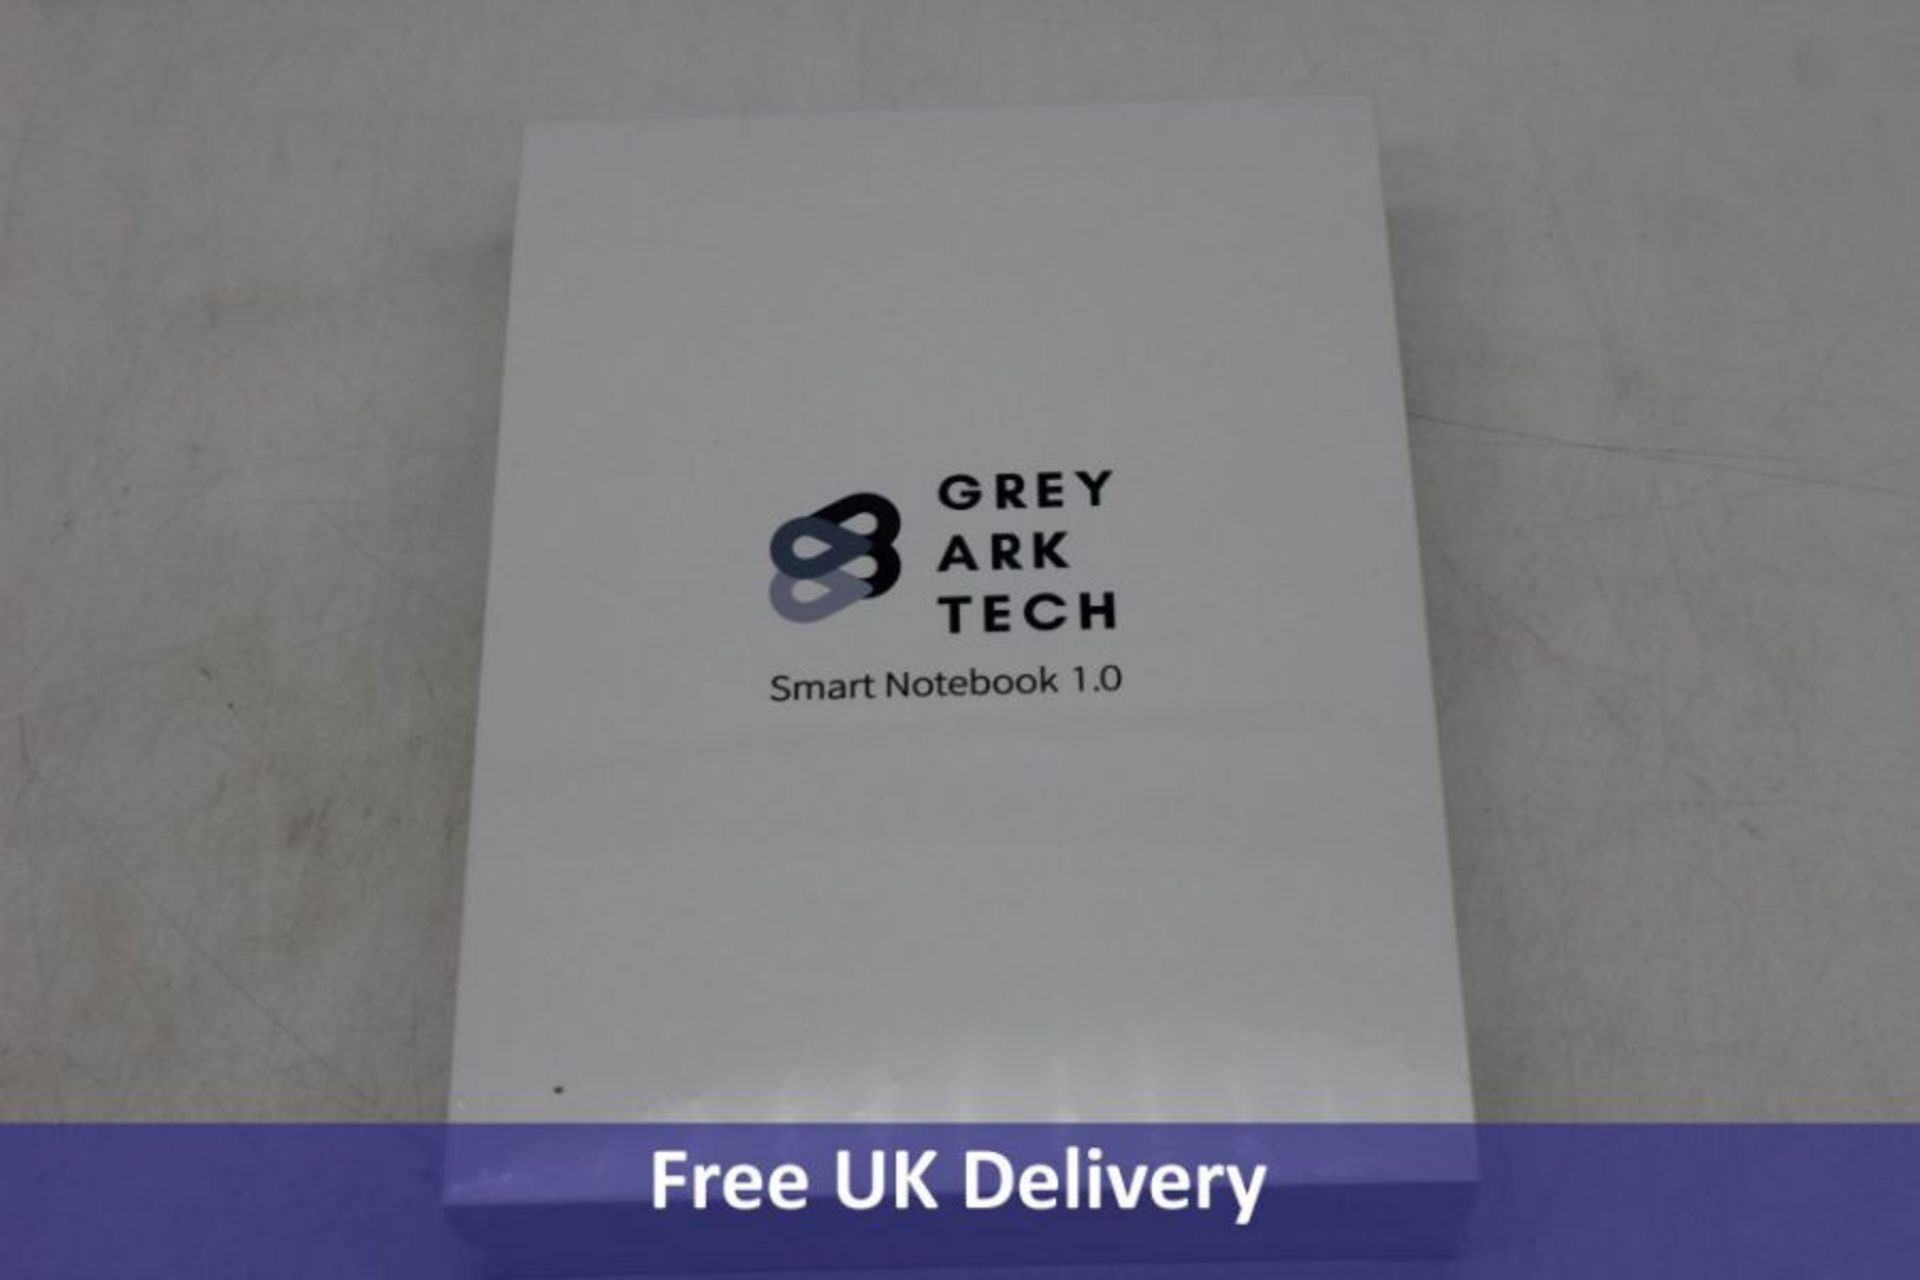 Five Grey Ark Tech Smart Notebooks, version 1.0